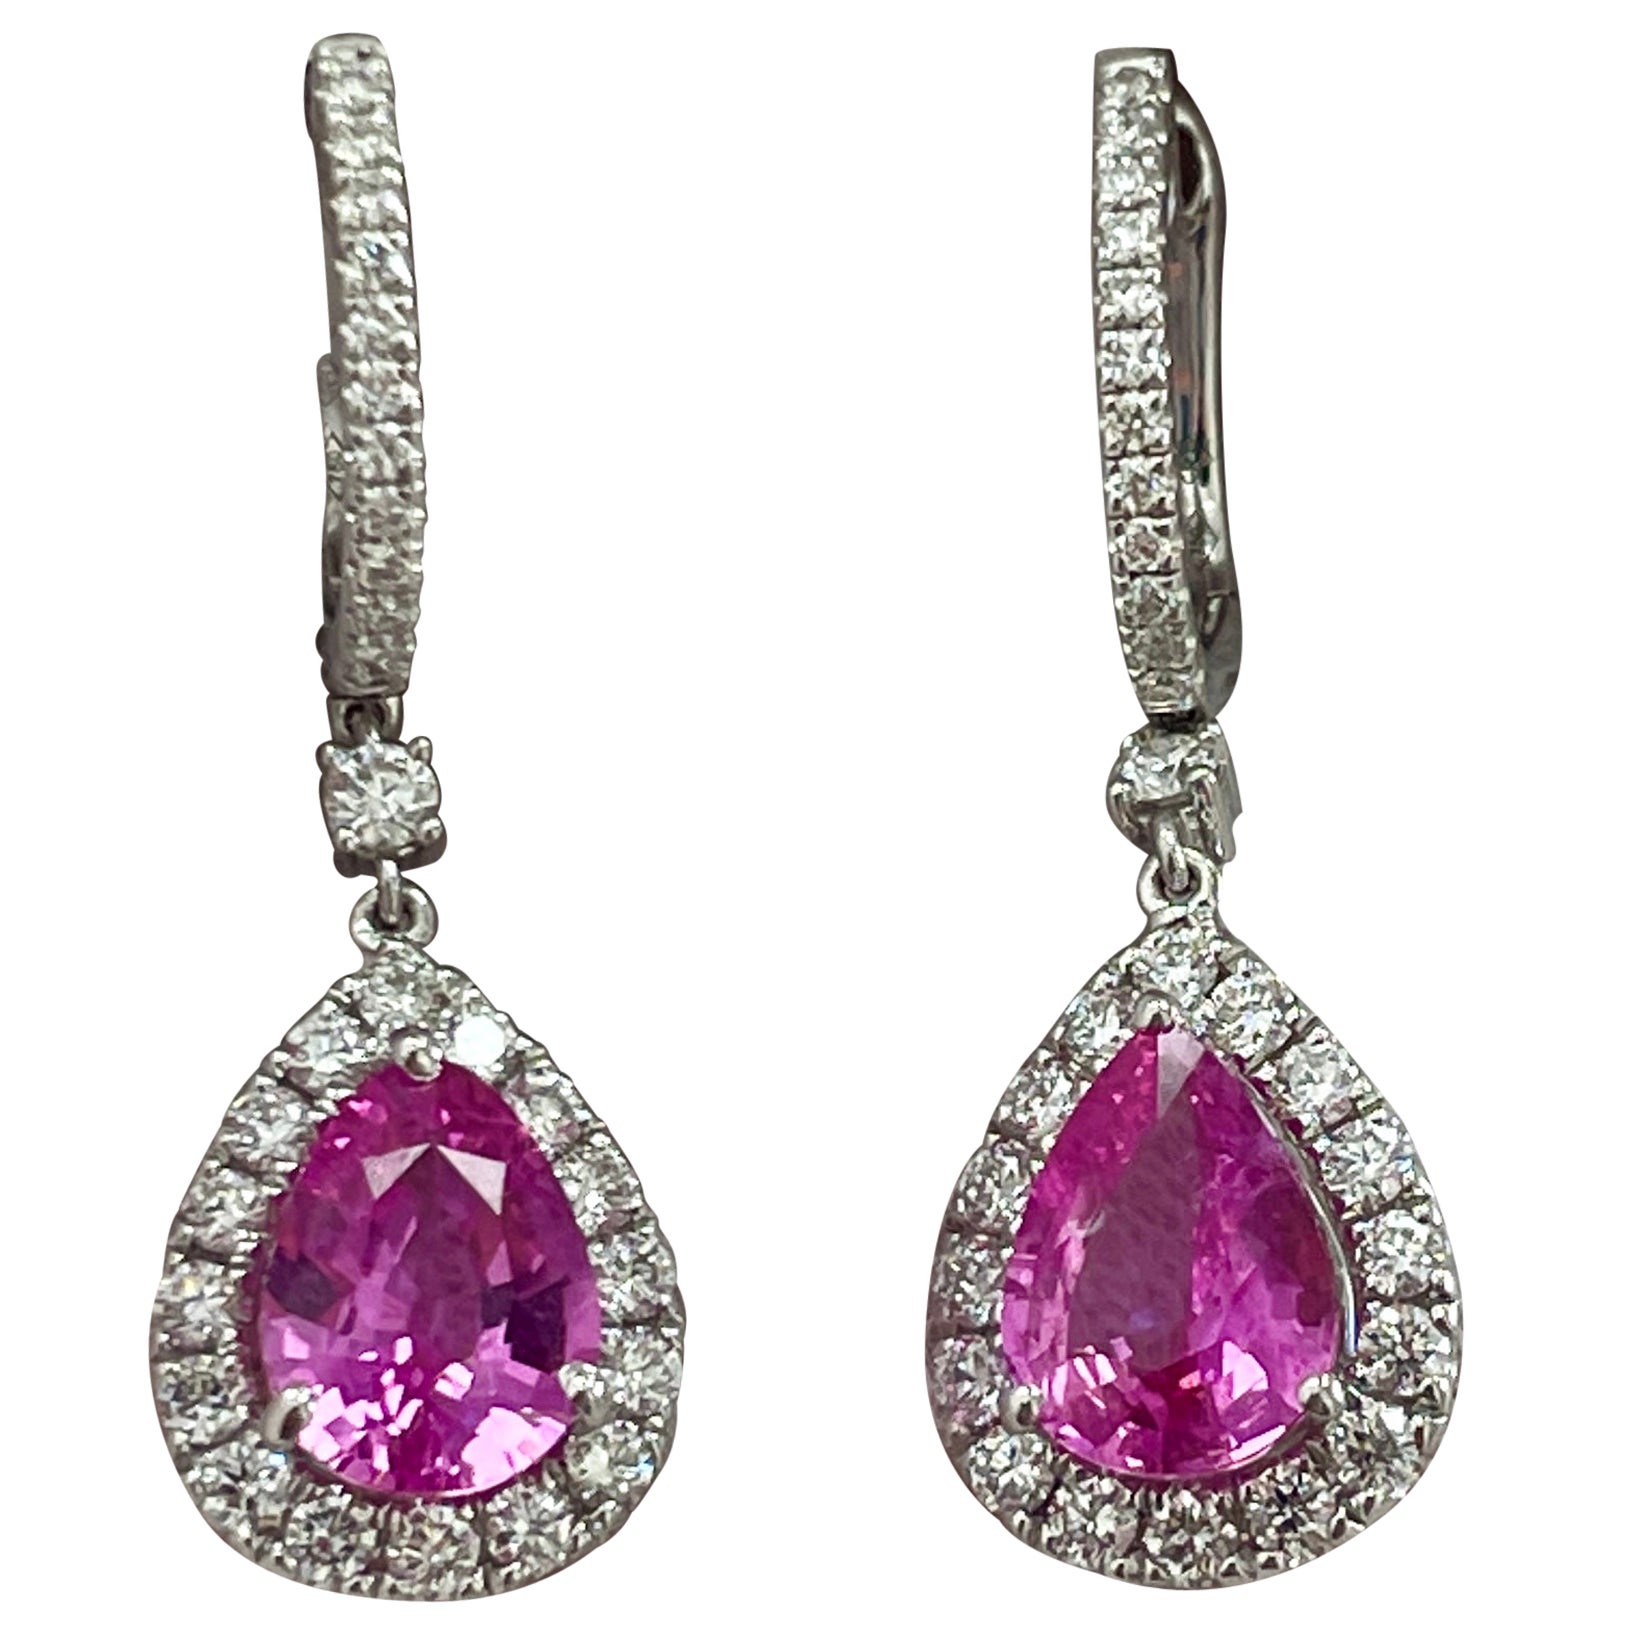 3.10 Carat Pink Sapphire, Diamond & White Gold Earrings